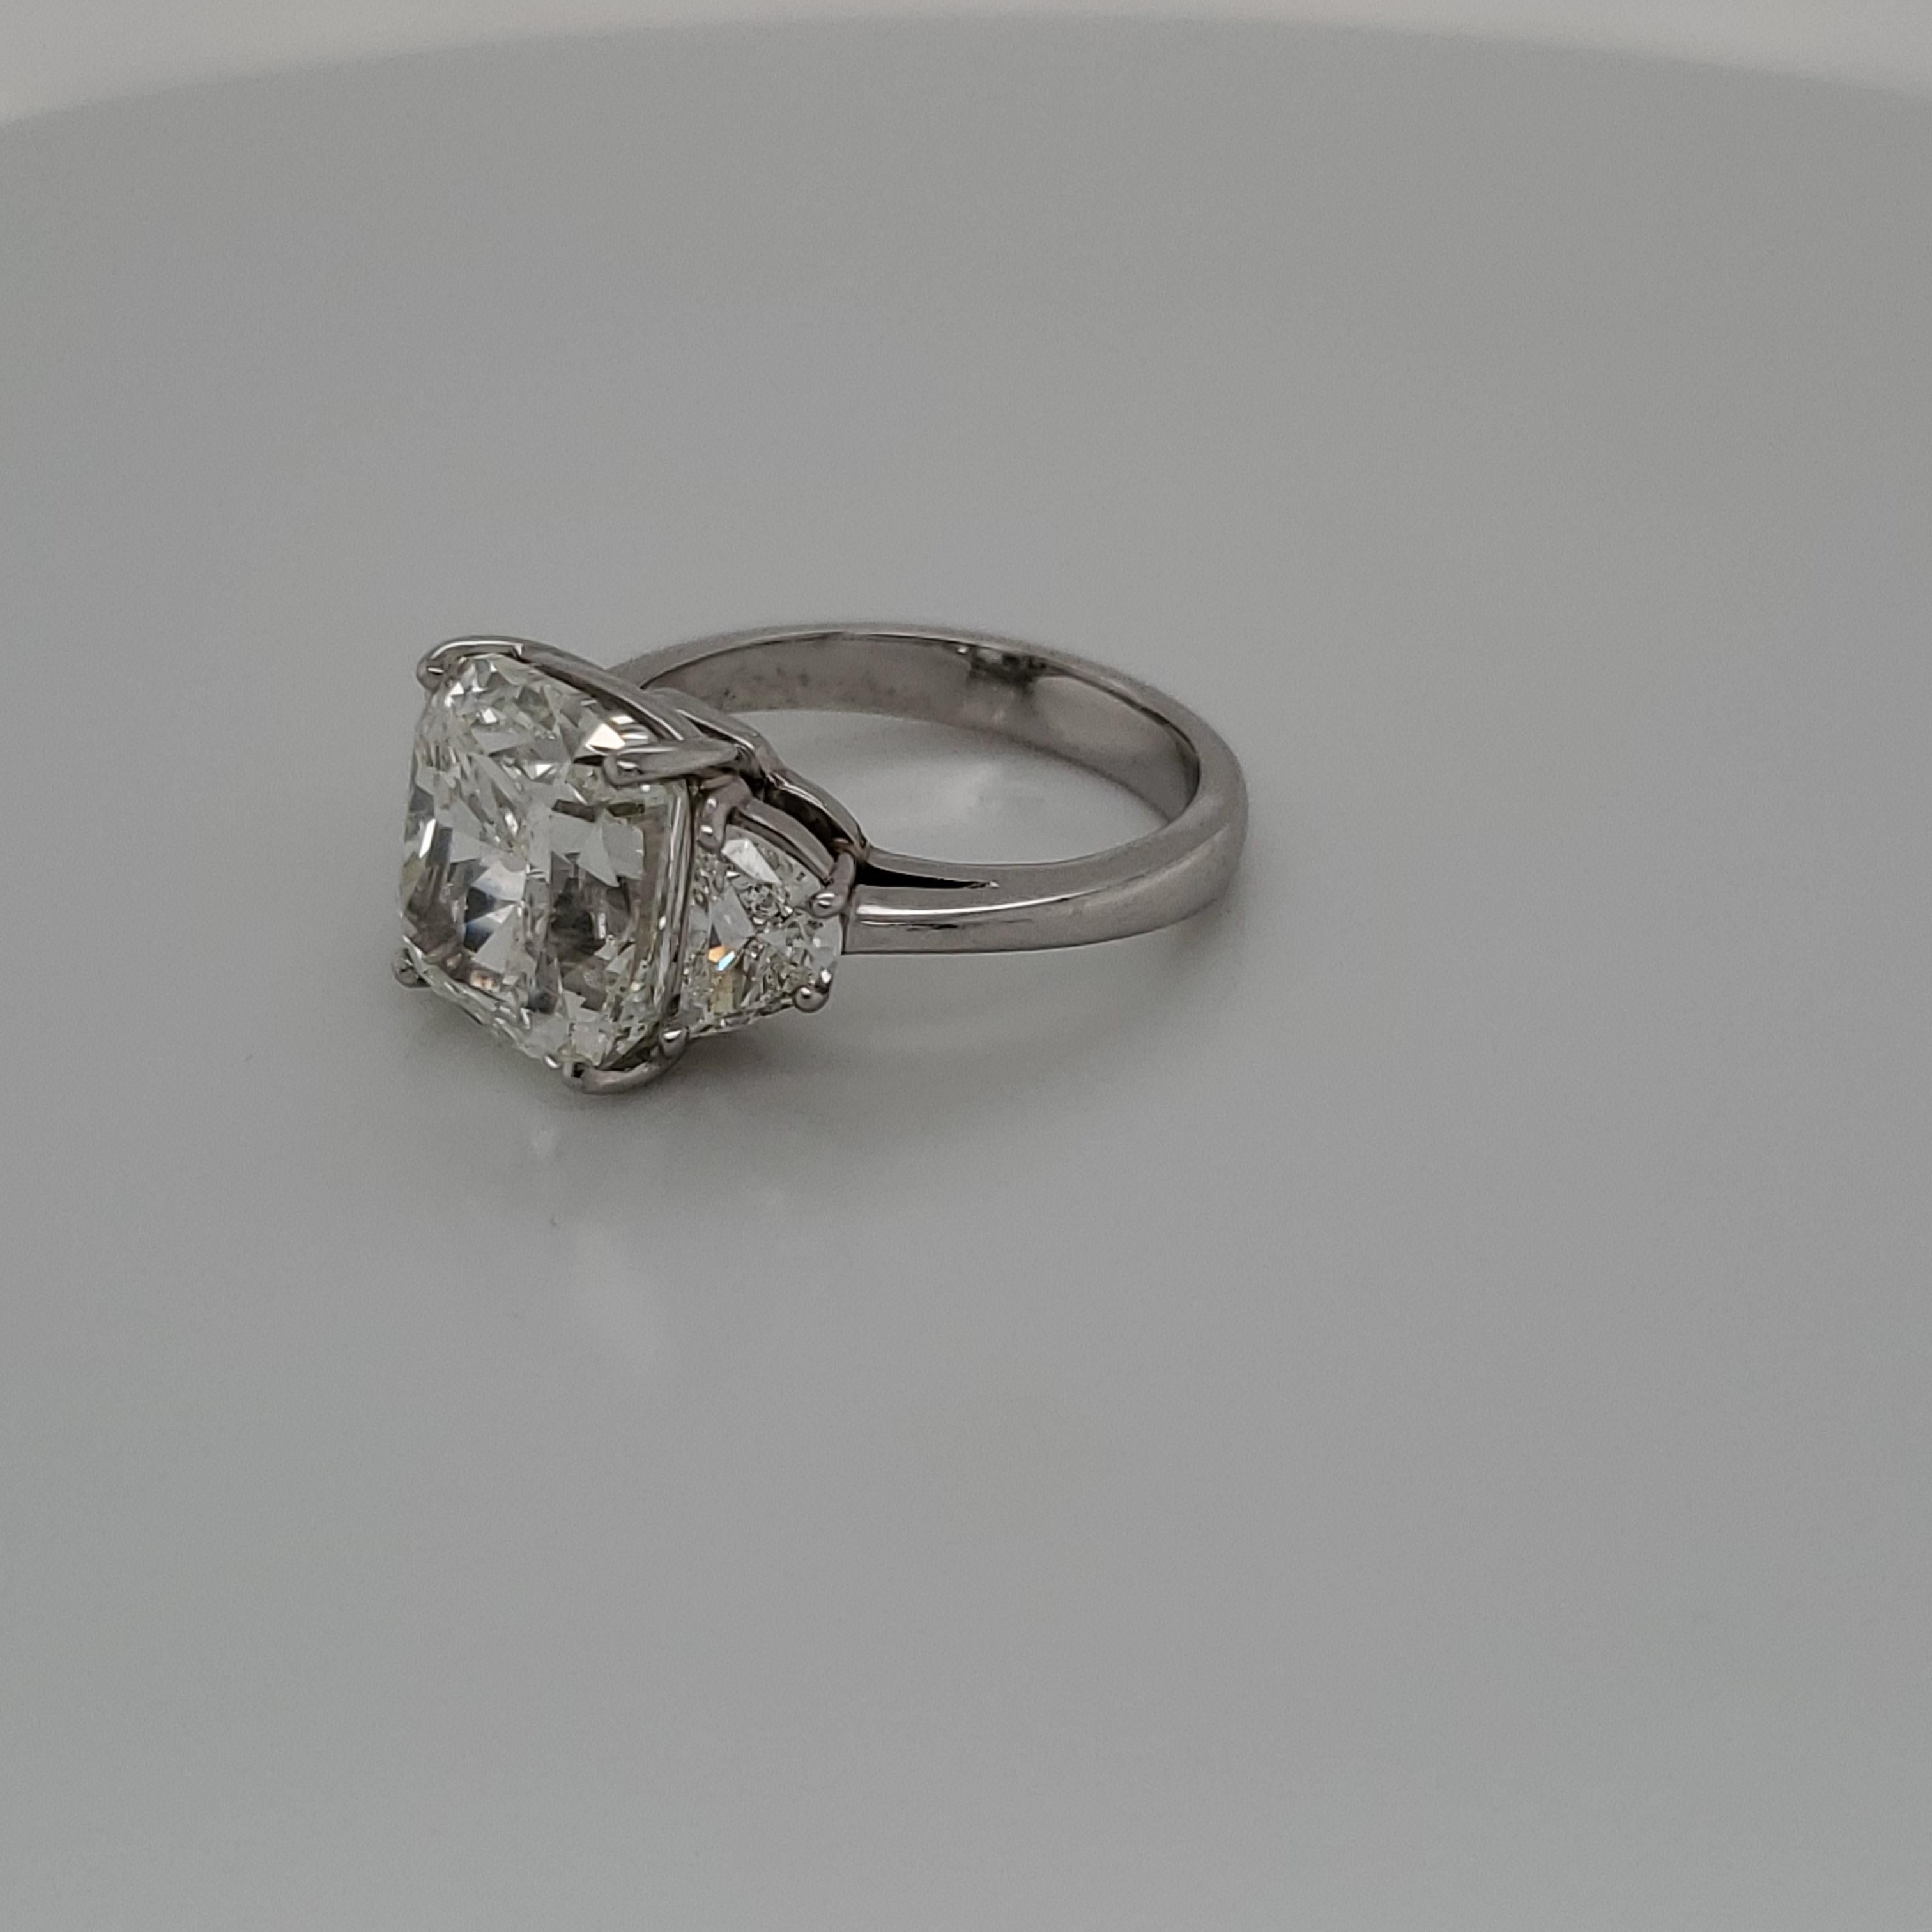 GIA Certified 7.03 carat cushion cut diamond J SI2 set in Platinum with 2 half-moon shaped diamonds weighing 1 carat total. 